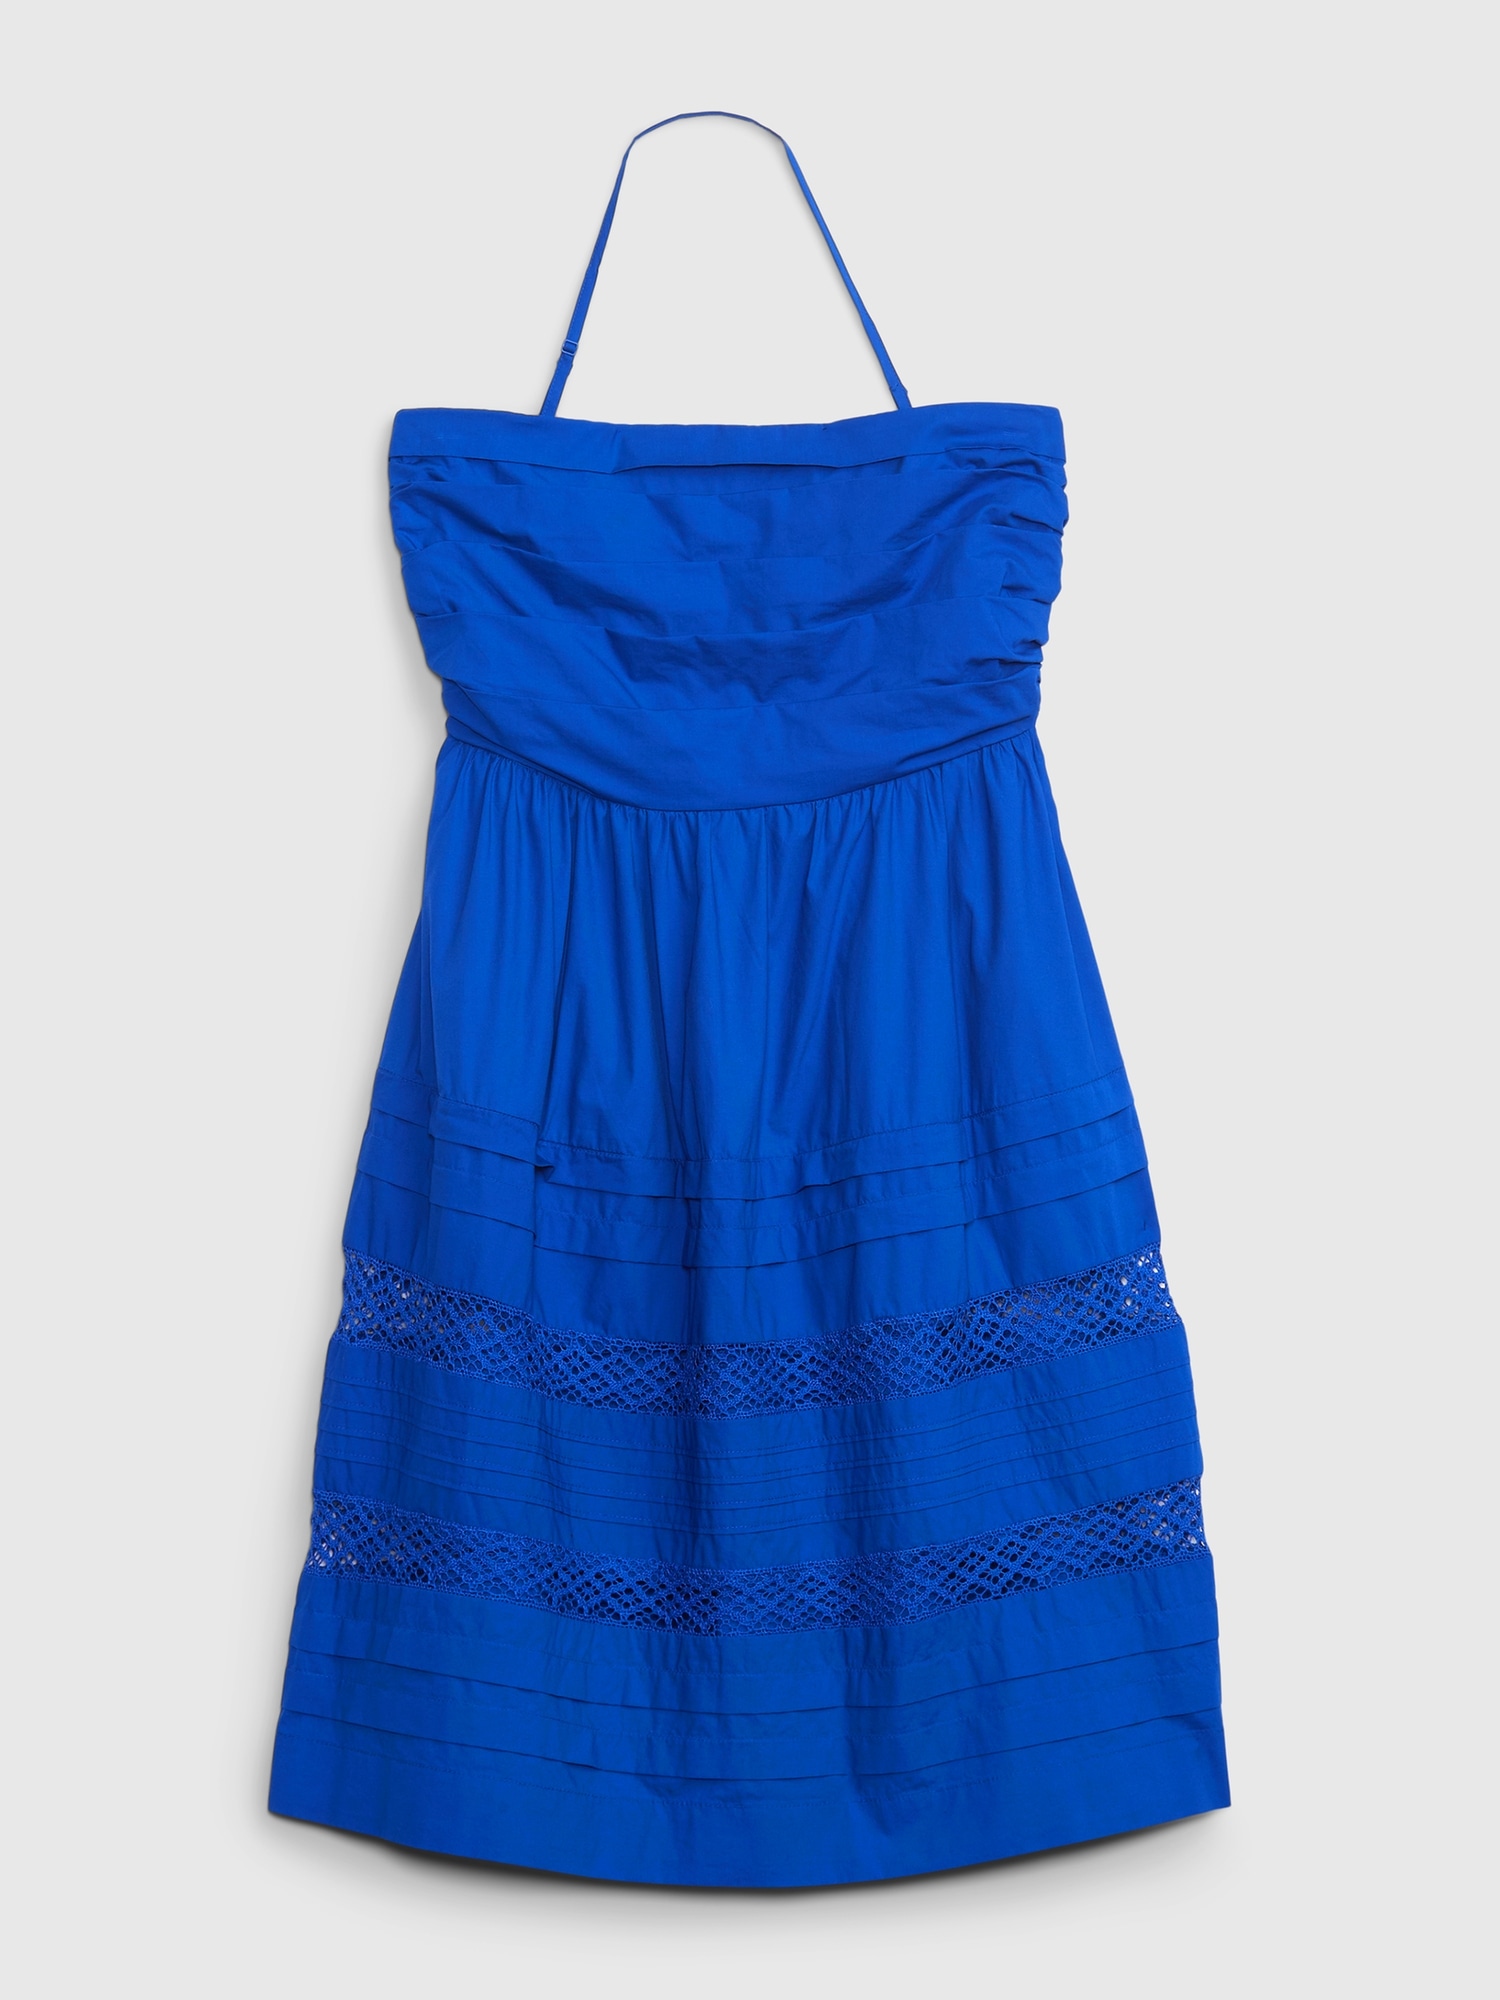 Gap Convertible Strapless Lace Mini Dress